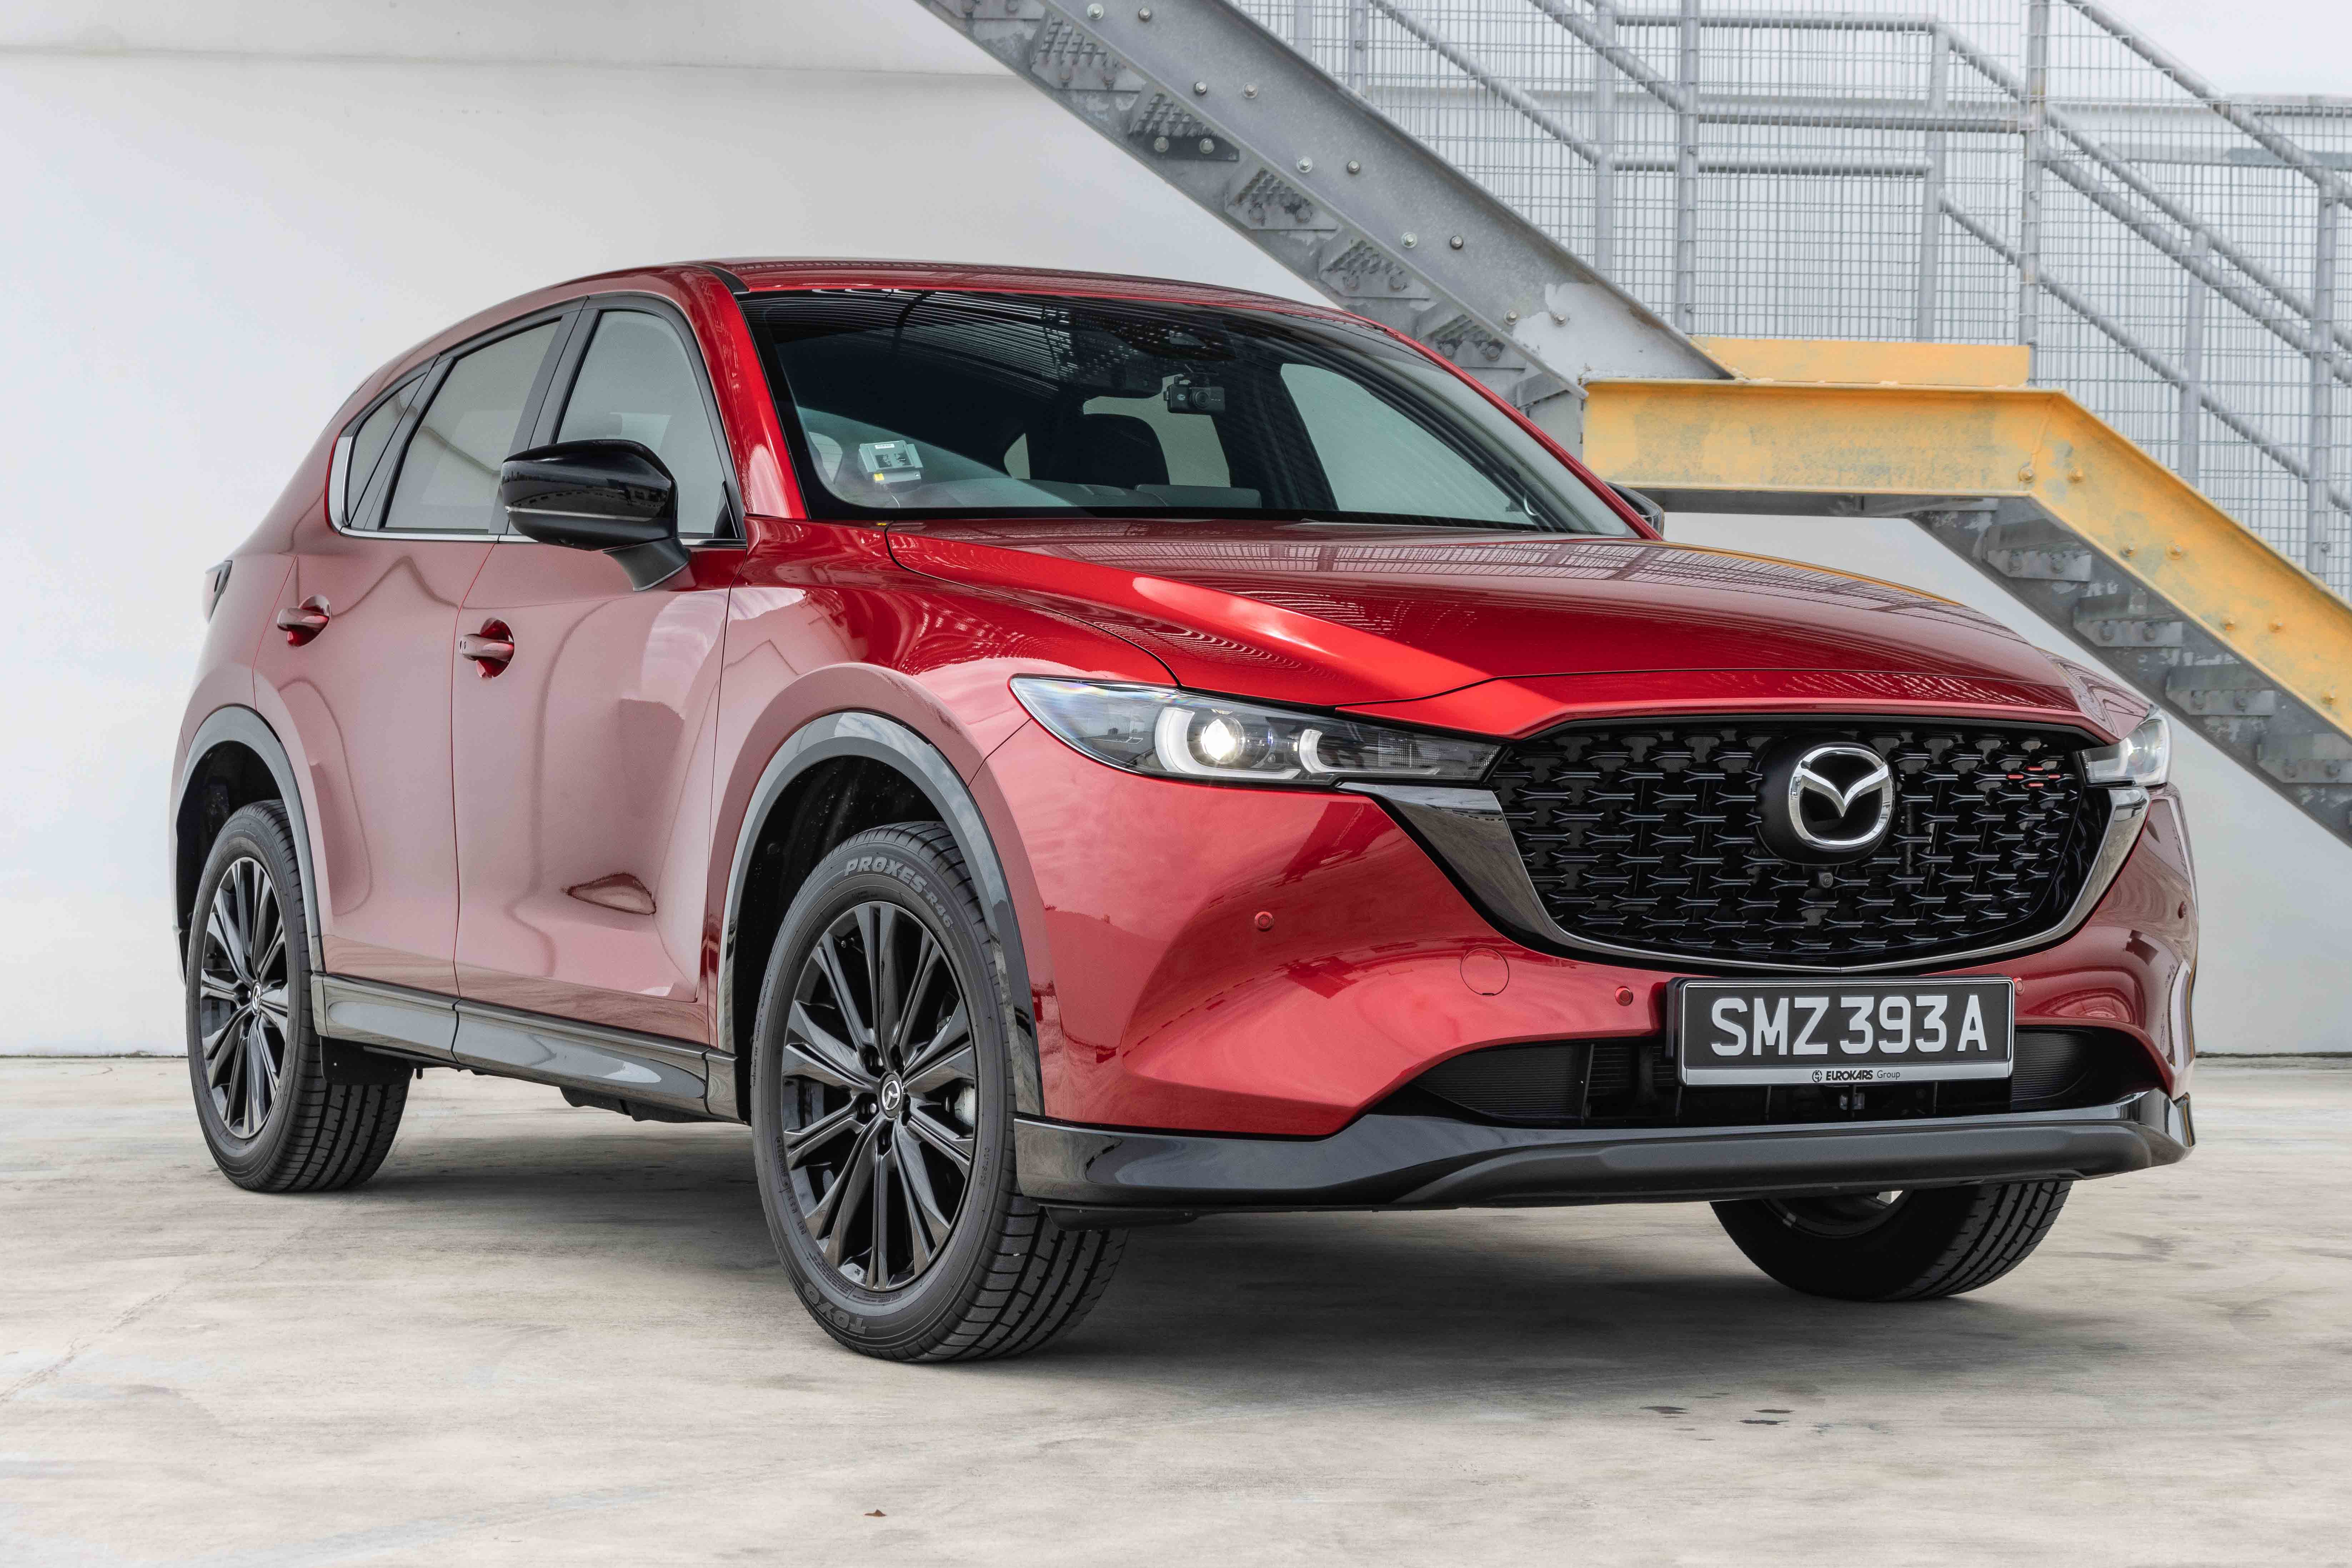 2022 Mazda CX-5 2.0 Luxury (Sports) Singapore - Front right